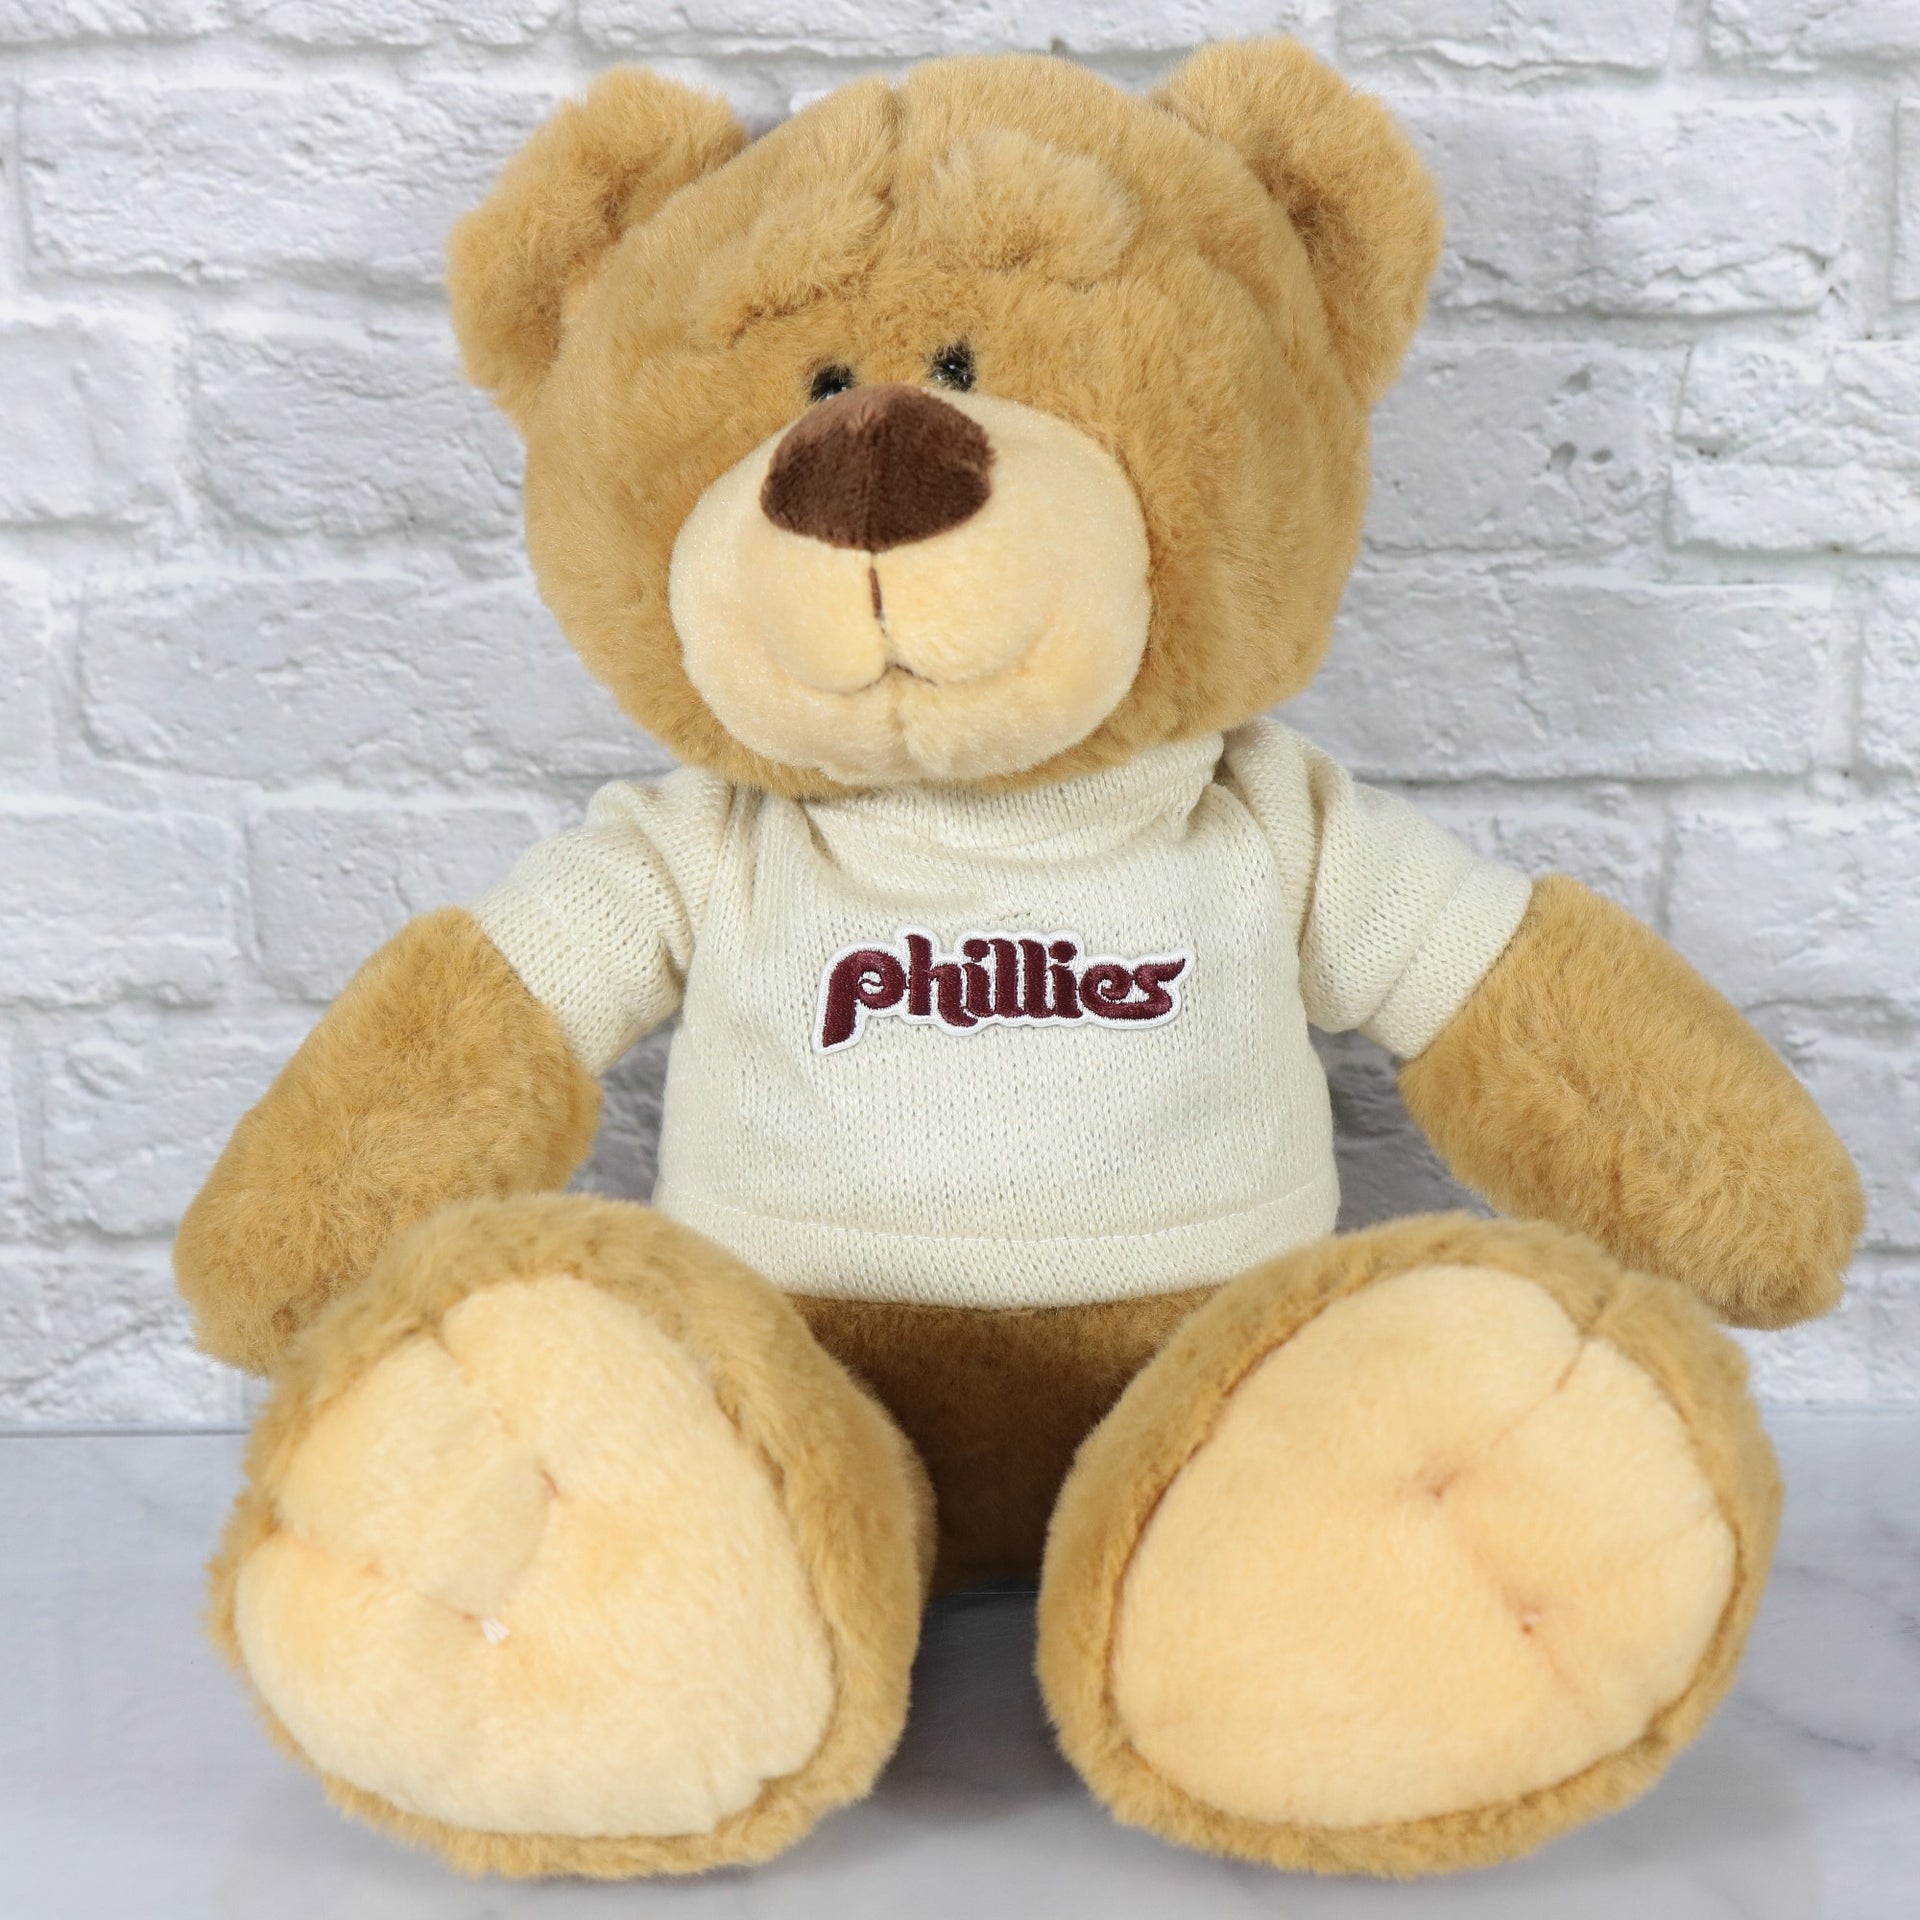 Philadelphia Phillies Fuzzy Wuzzy "Phillies" Cooperstown wordmark Cream Sweater | Light Brown Teddy Bear